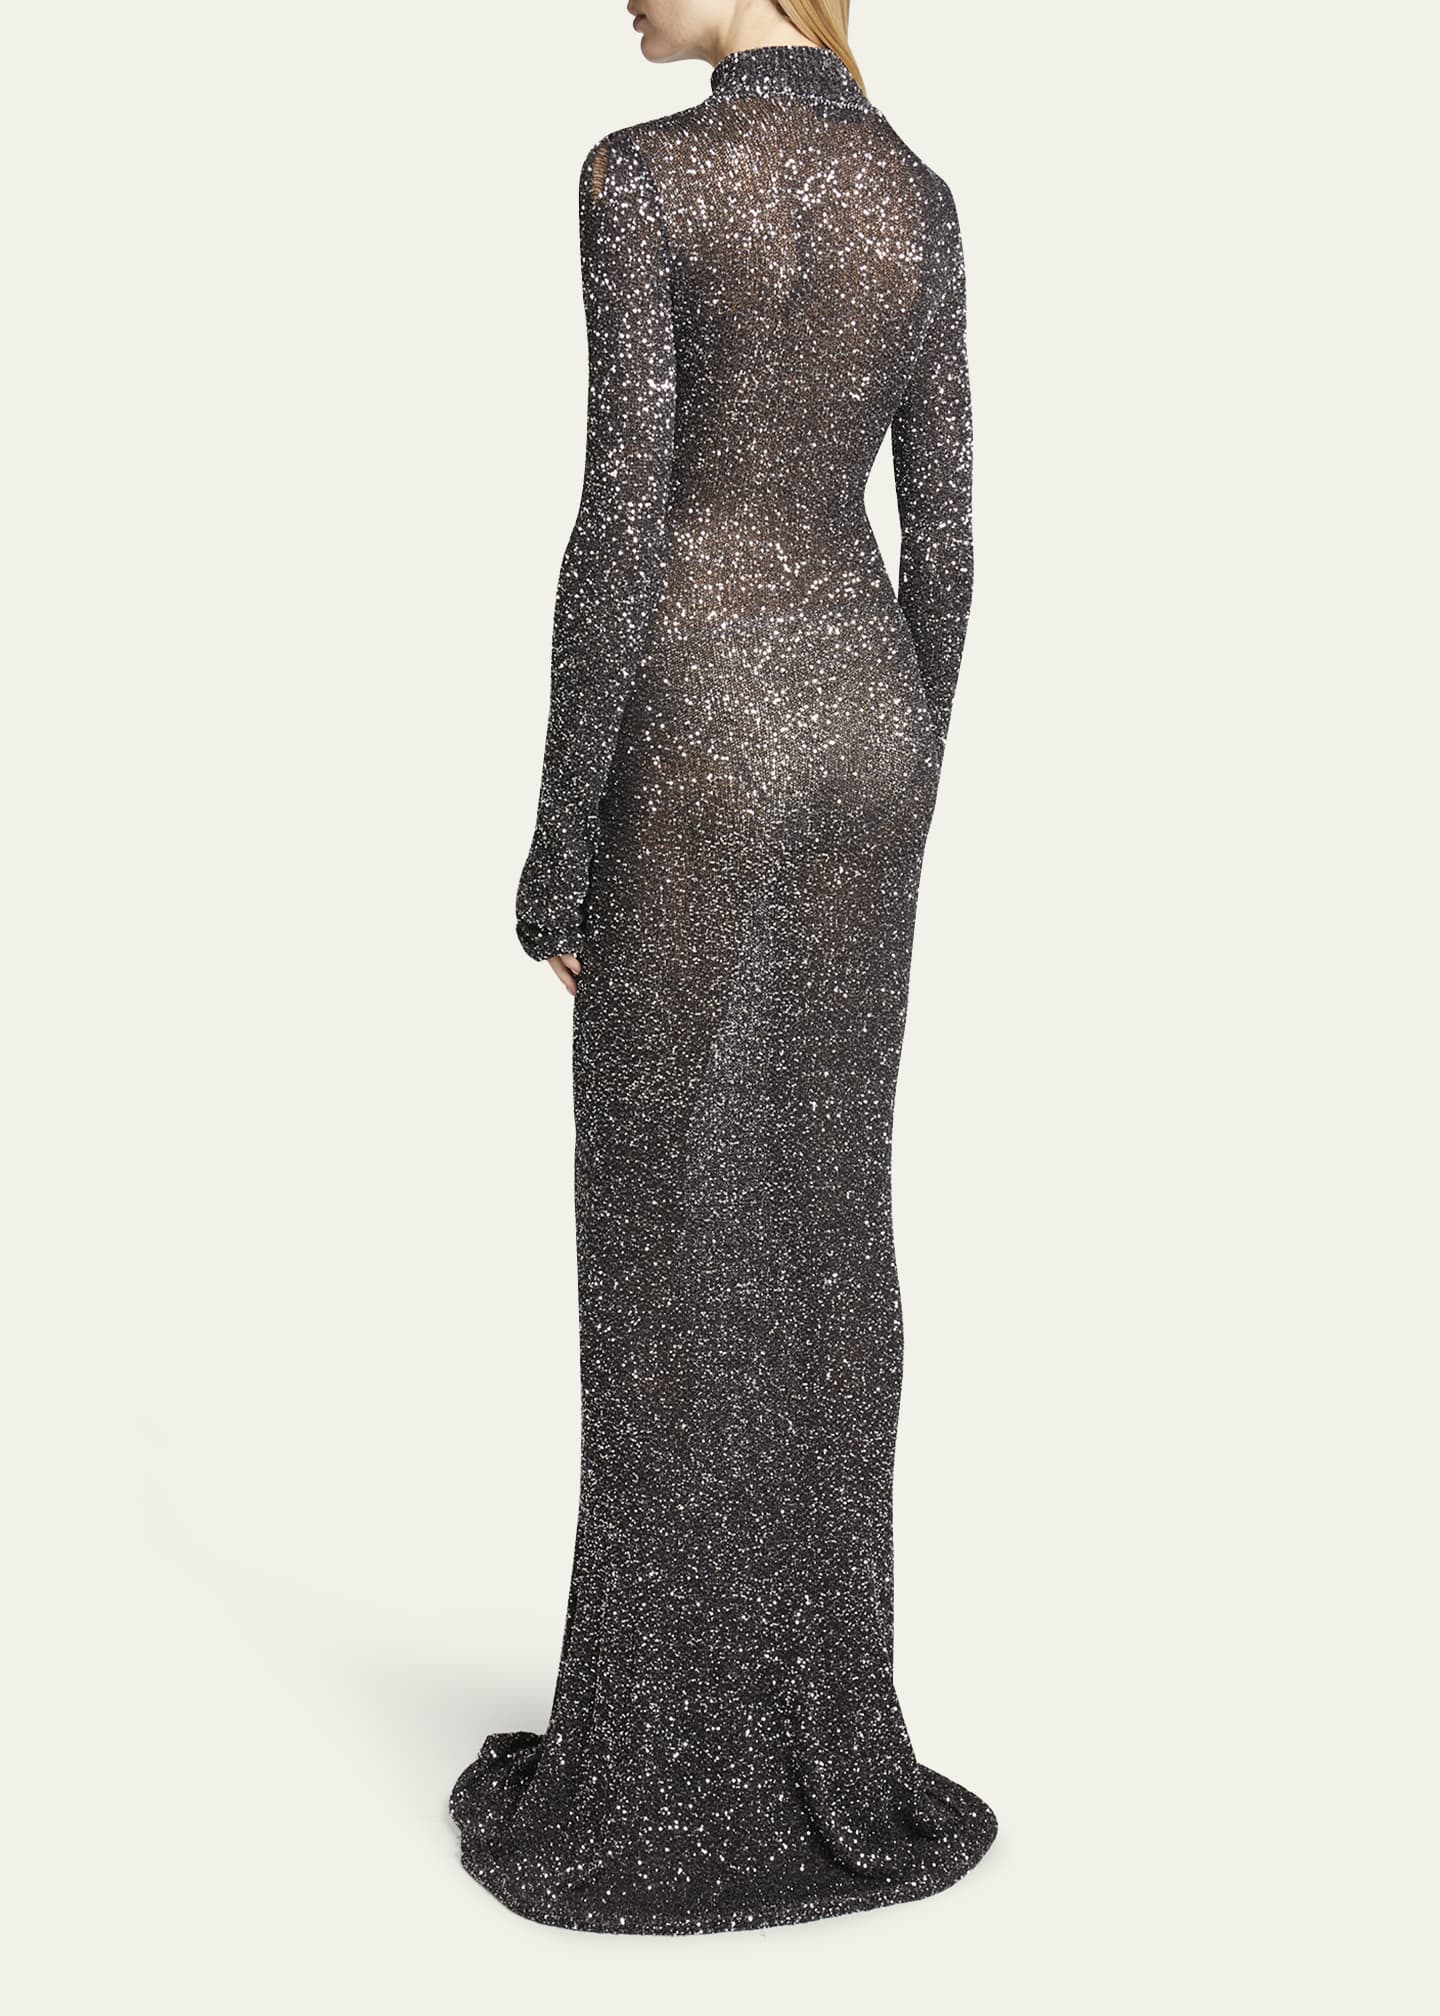 Sequined metallic knit maxi dress in brown - Balenciaga